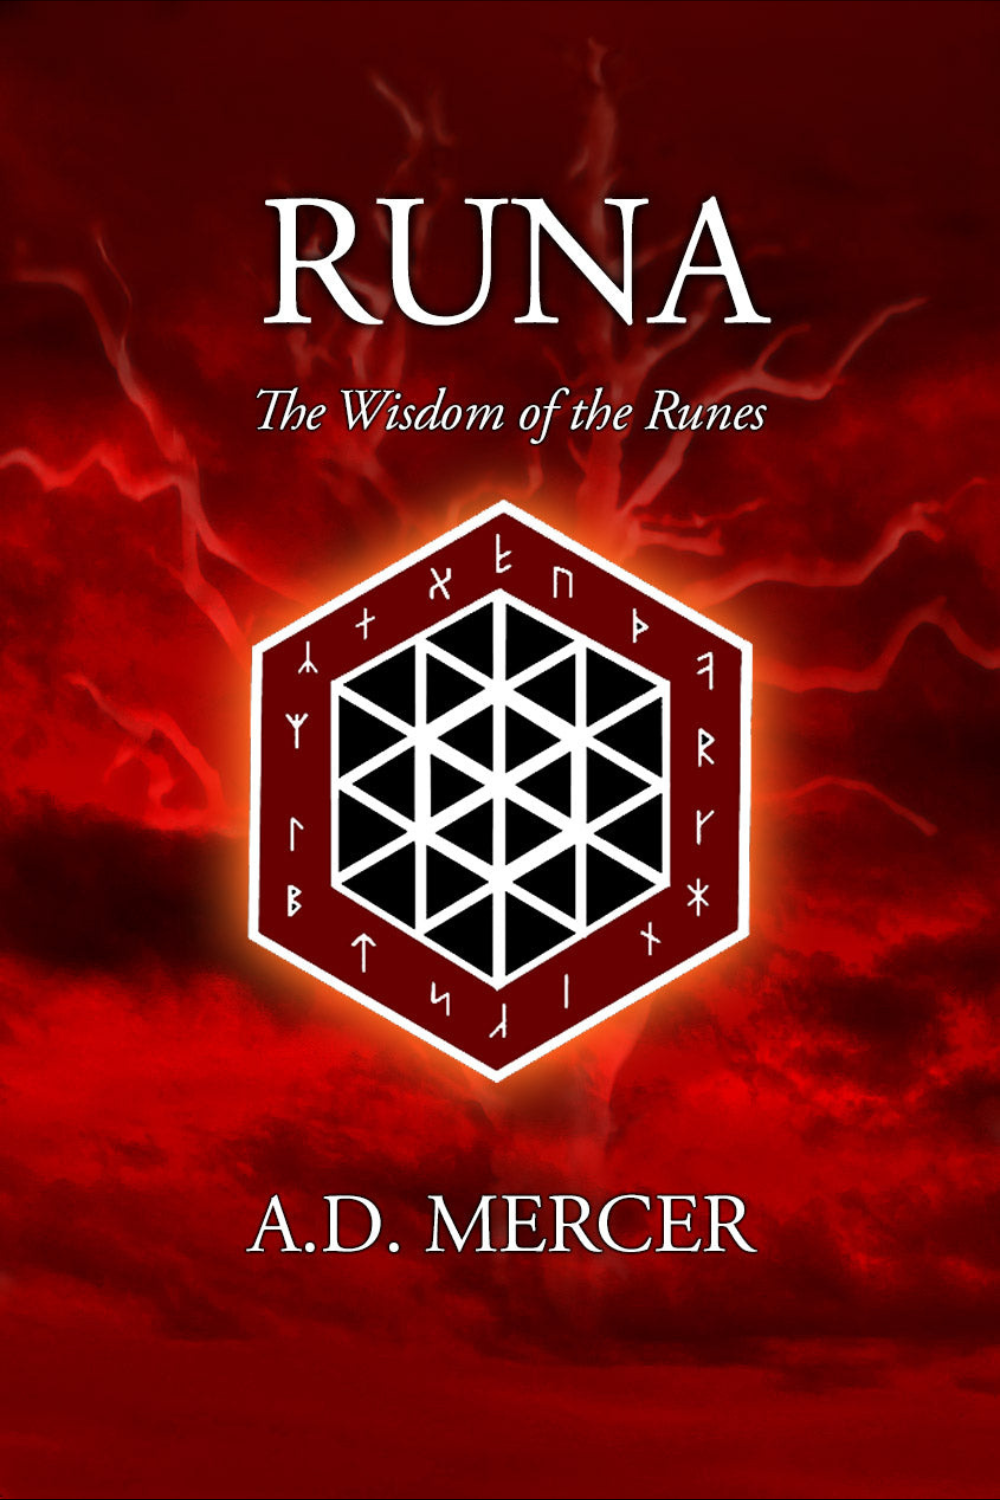 Runa: The Wisdom of the Runes by A.D Mercer (Paperback)